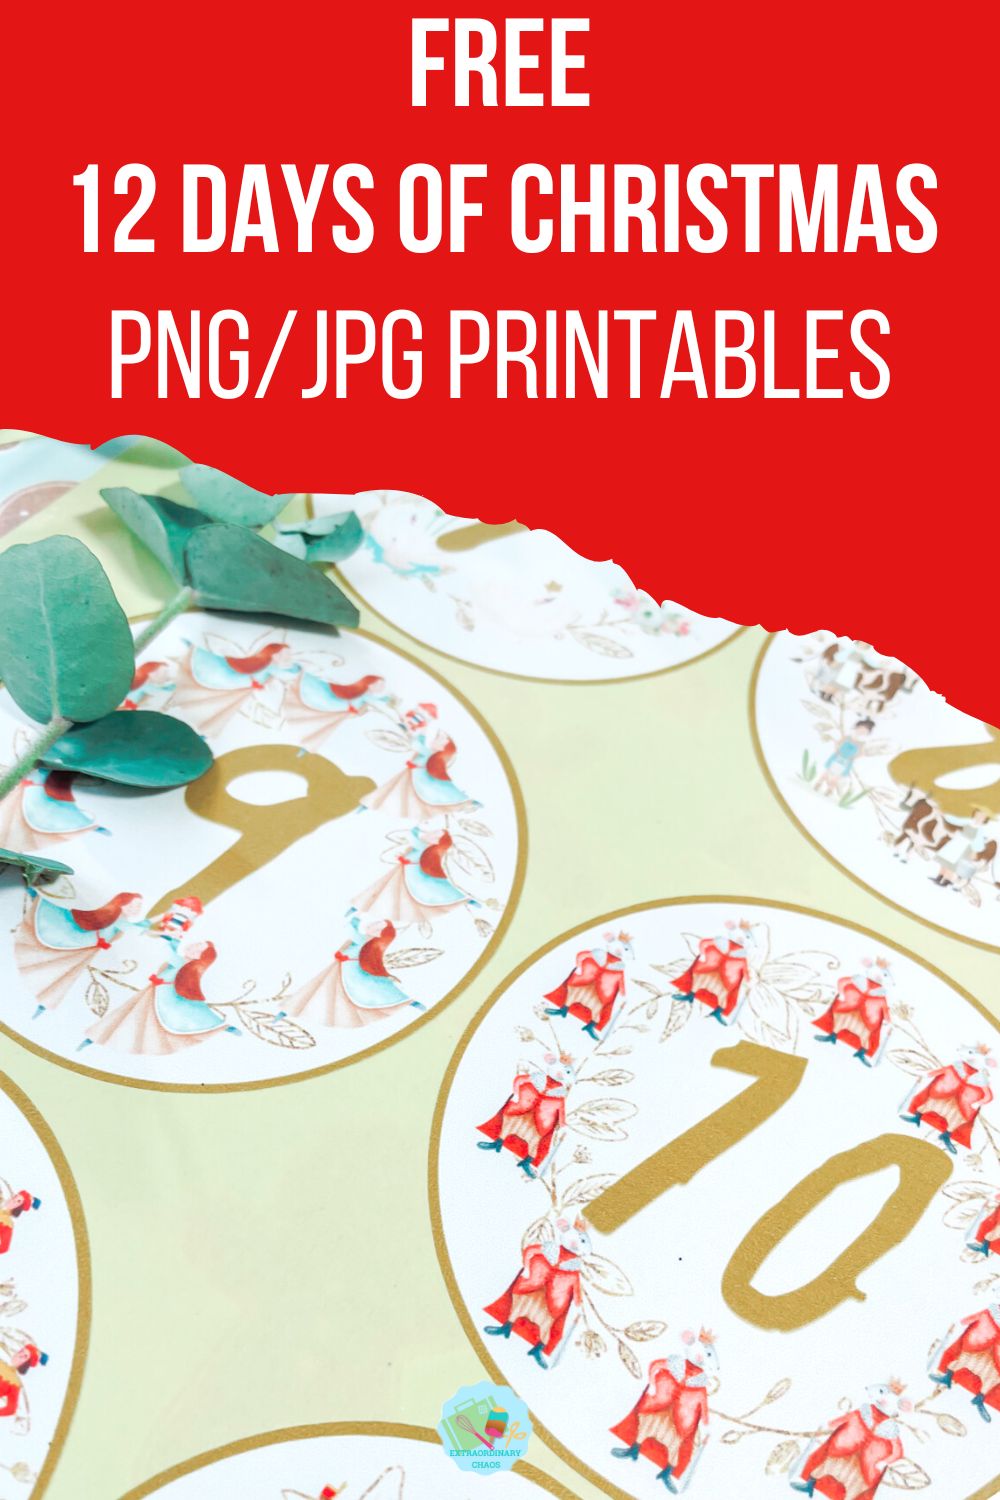 Free 12 Days of Christmas PNG/JPG Printables